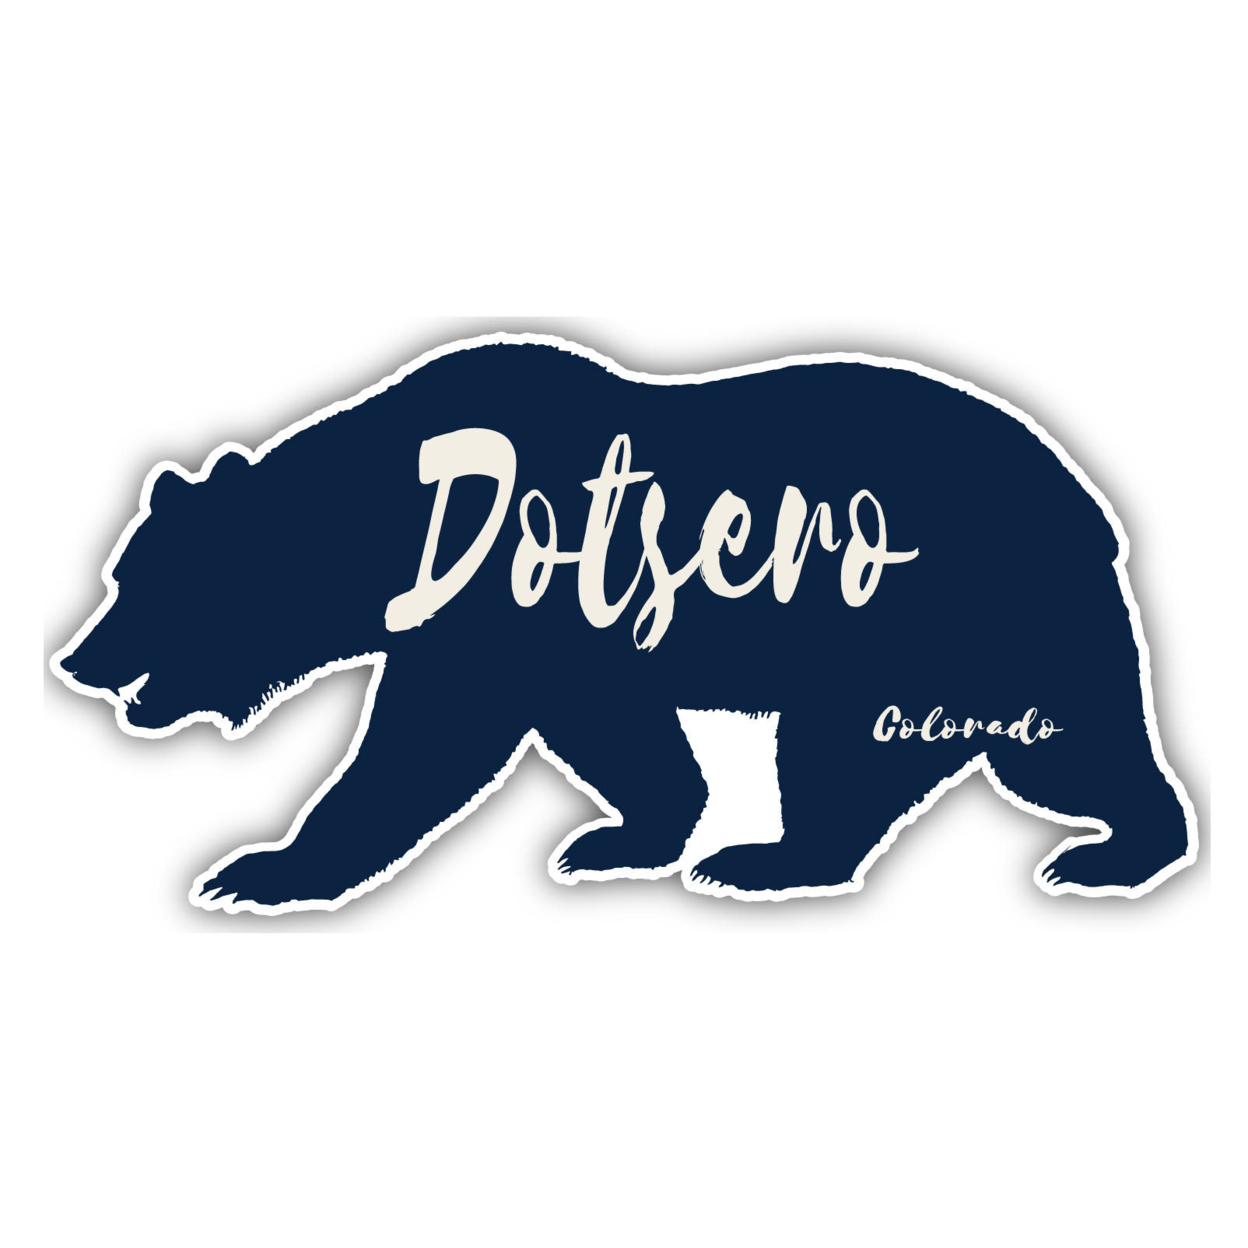 Dotsero Colorado Souvenir Decorative Stickers (Choose Theme And Size) - 4-Pack, 8-Inch, Bear